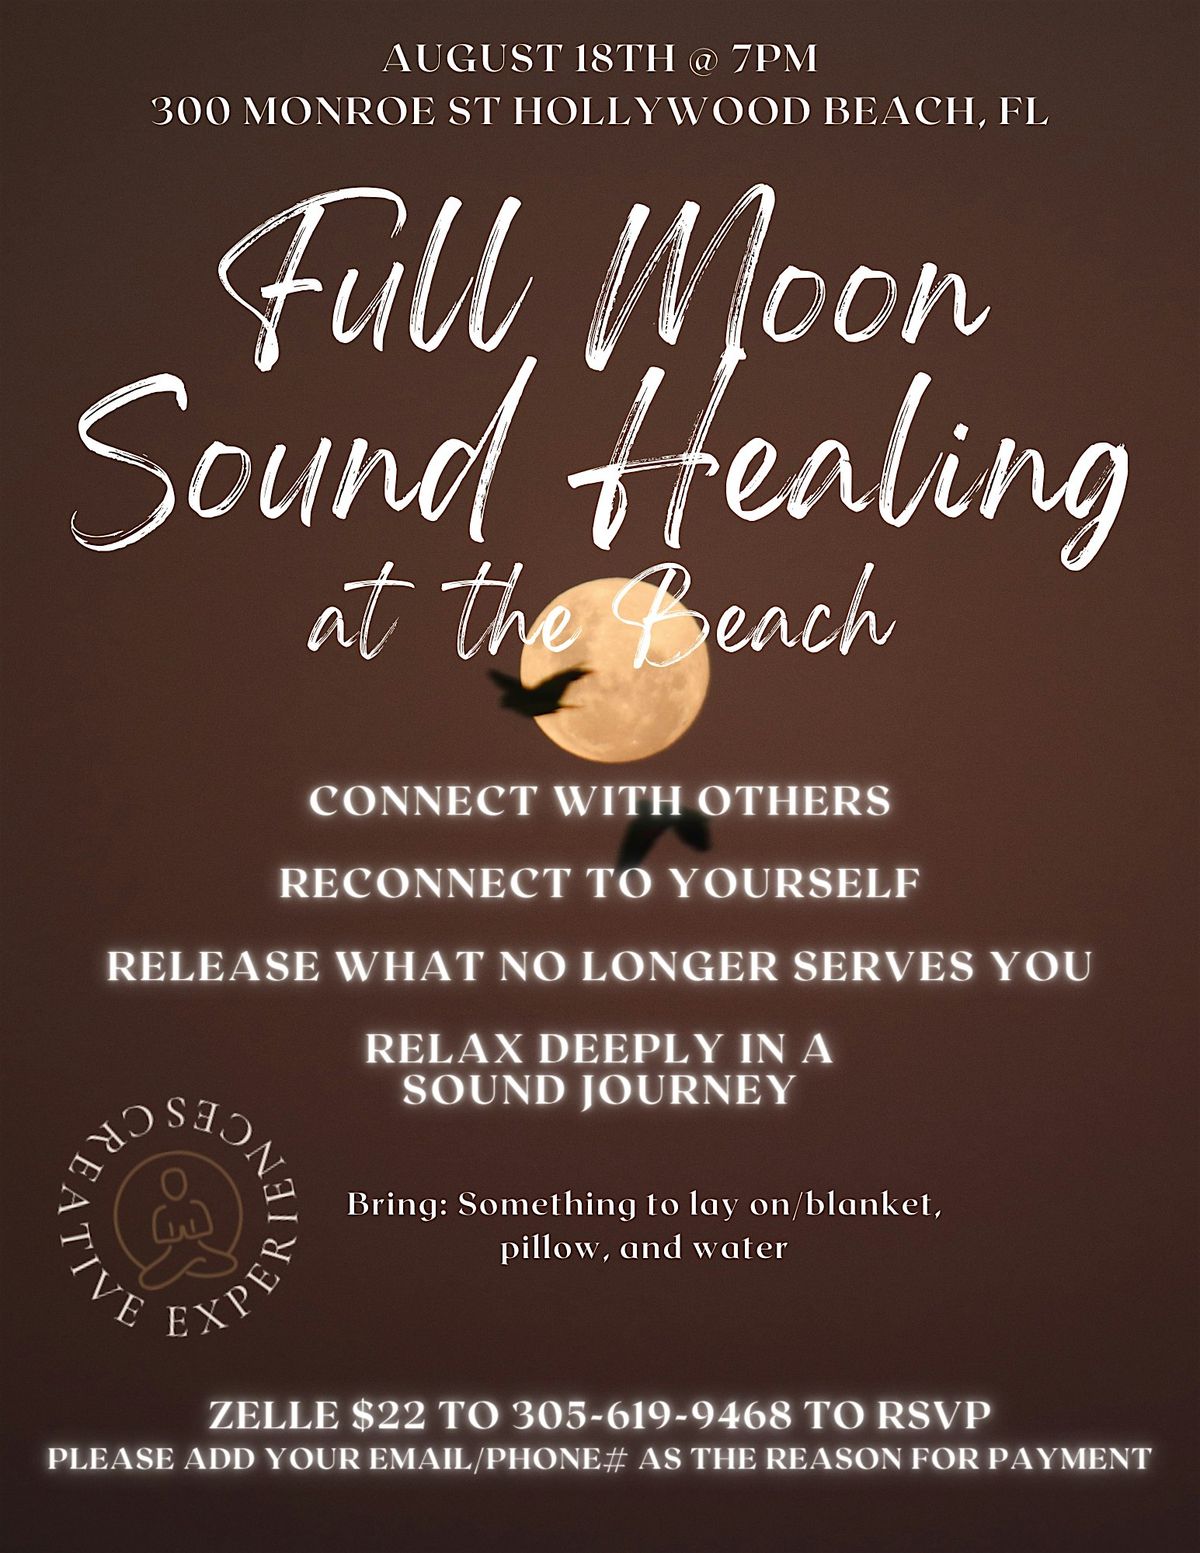 Full Moon Sound Healing at the beach